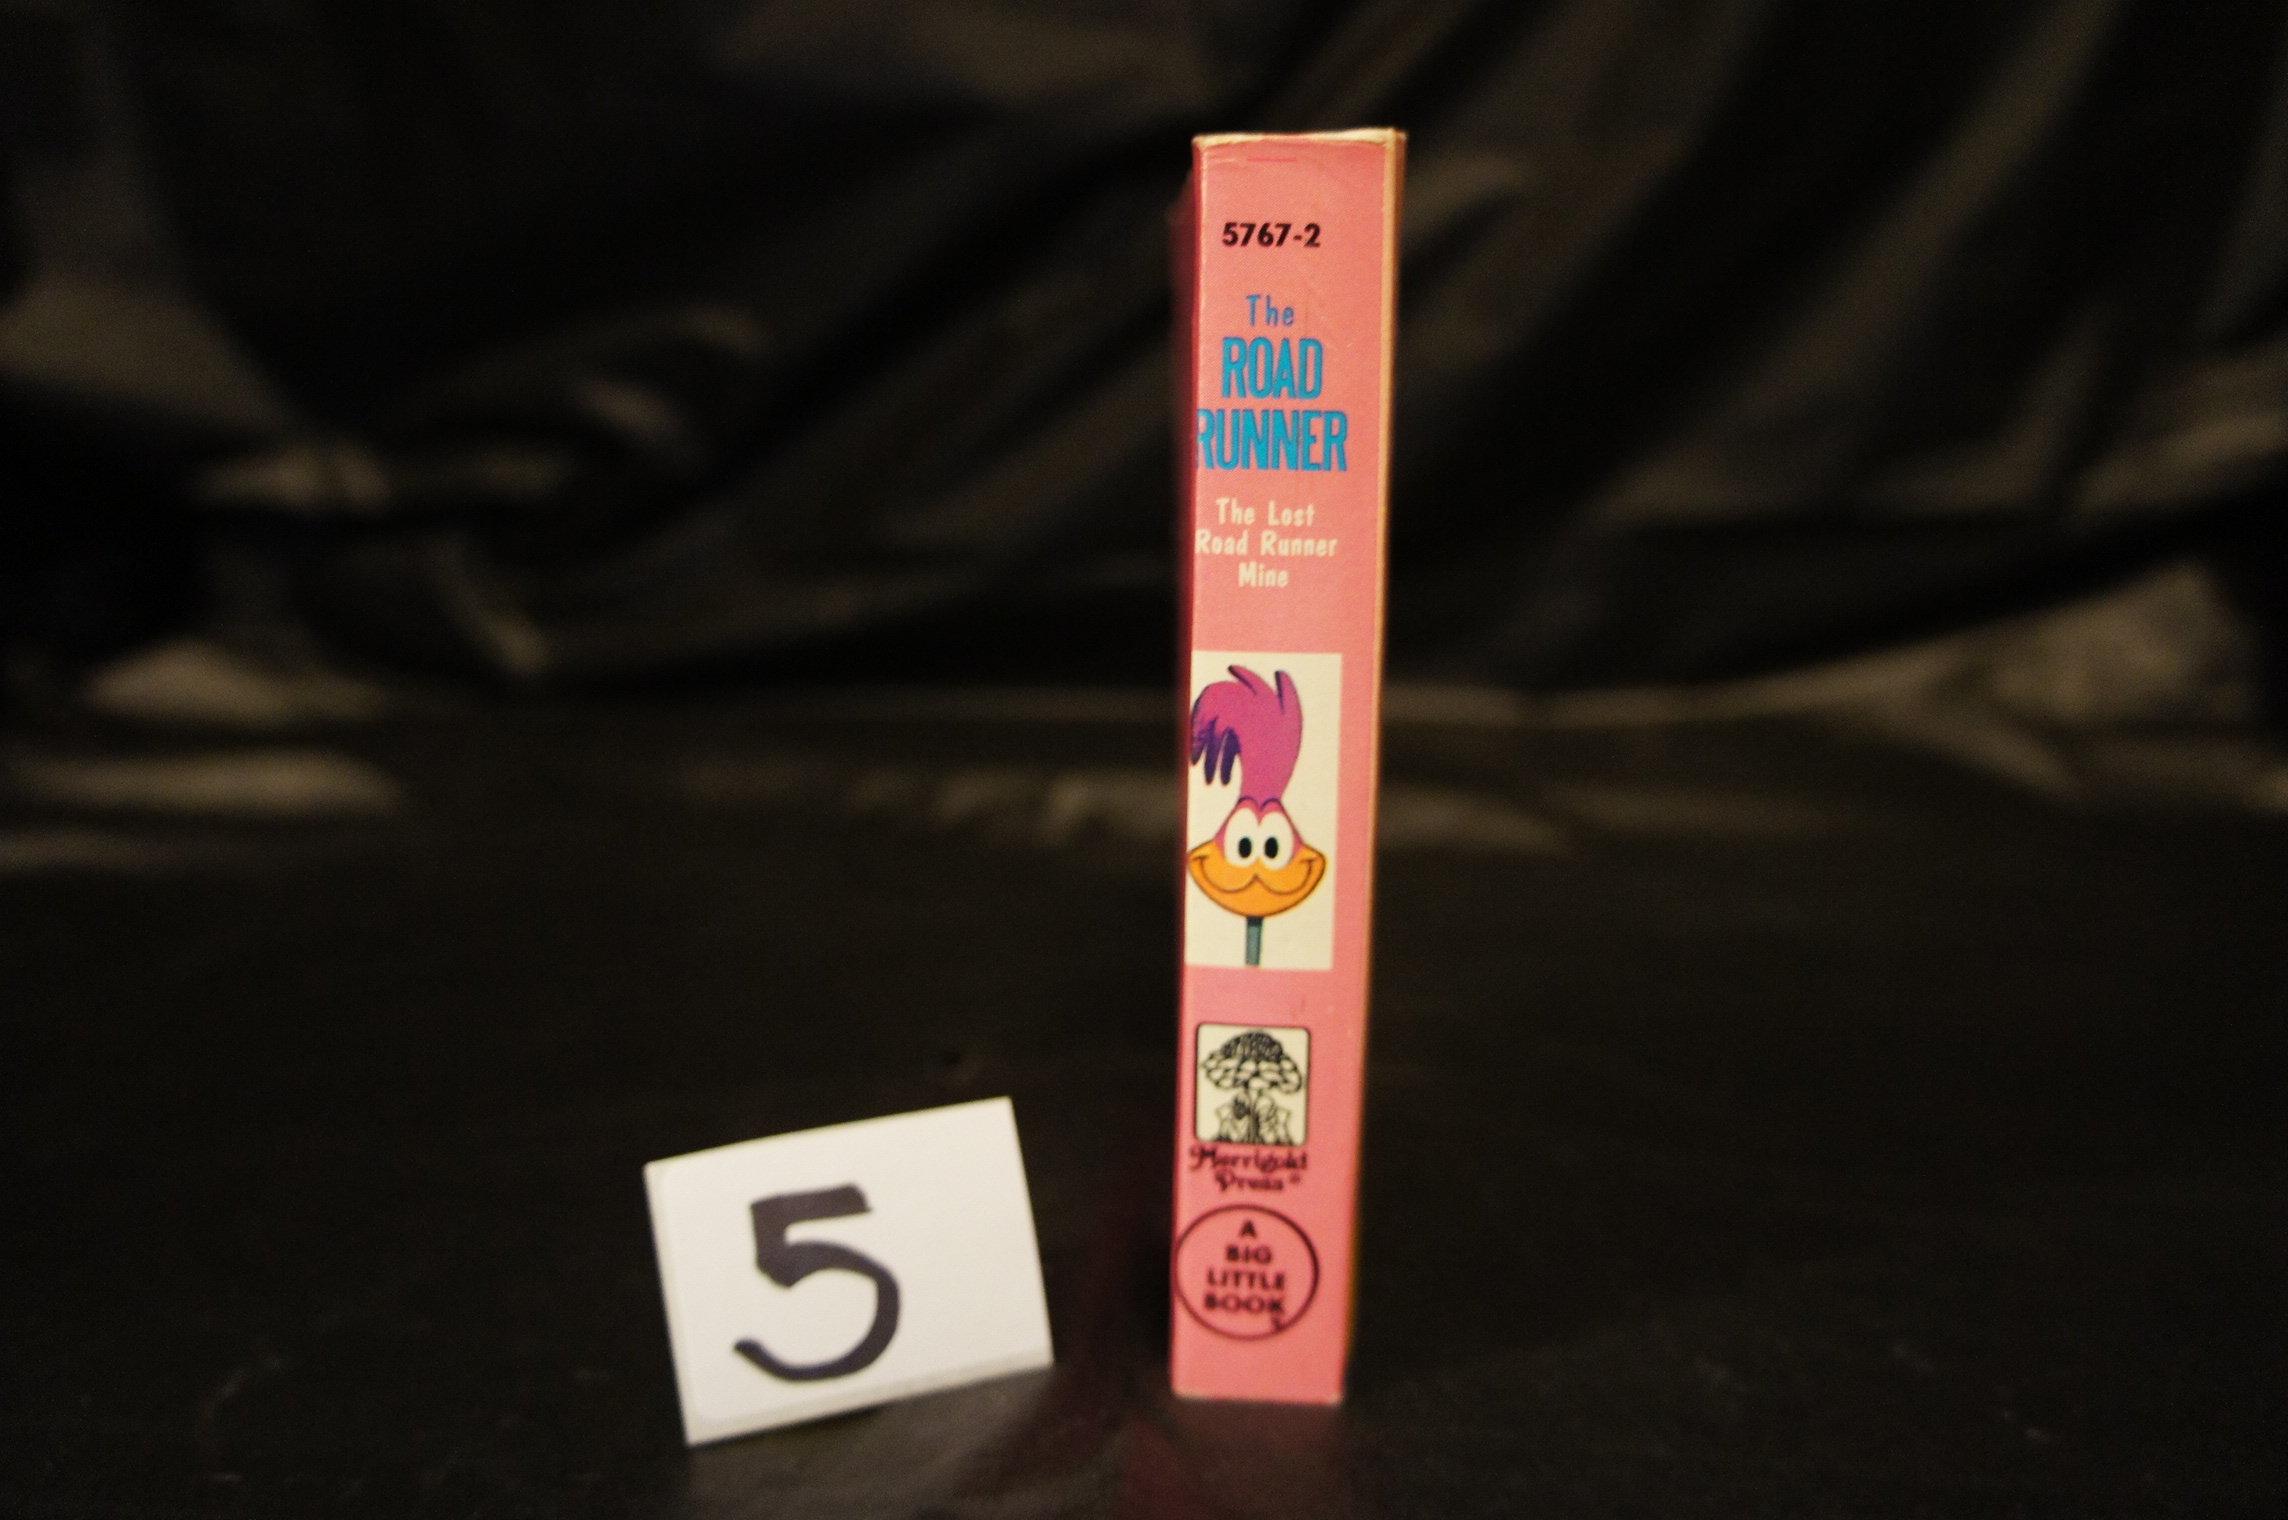 The ROAD RUNNER - Flip-It Cartoons  3.5"x5" book  Merrigold Press 5767-2  [excellent condition]